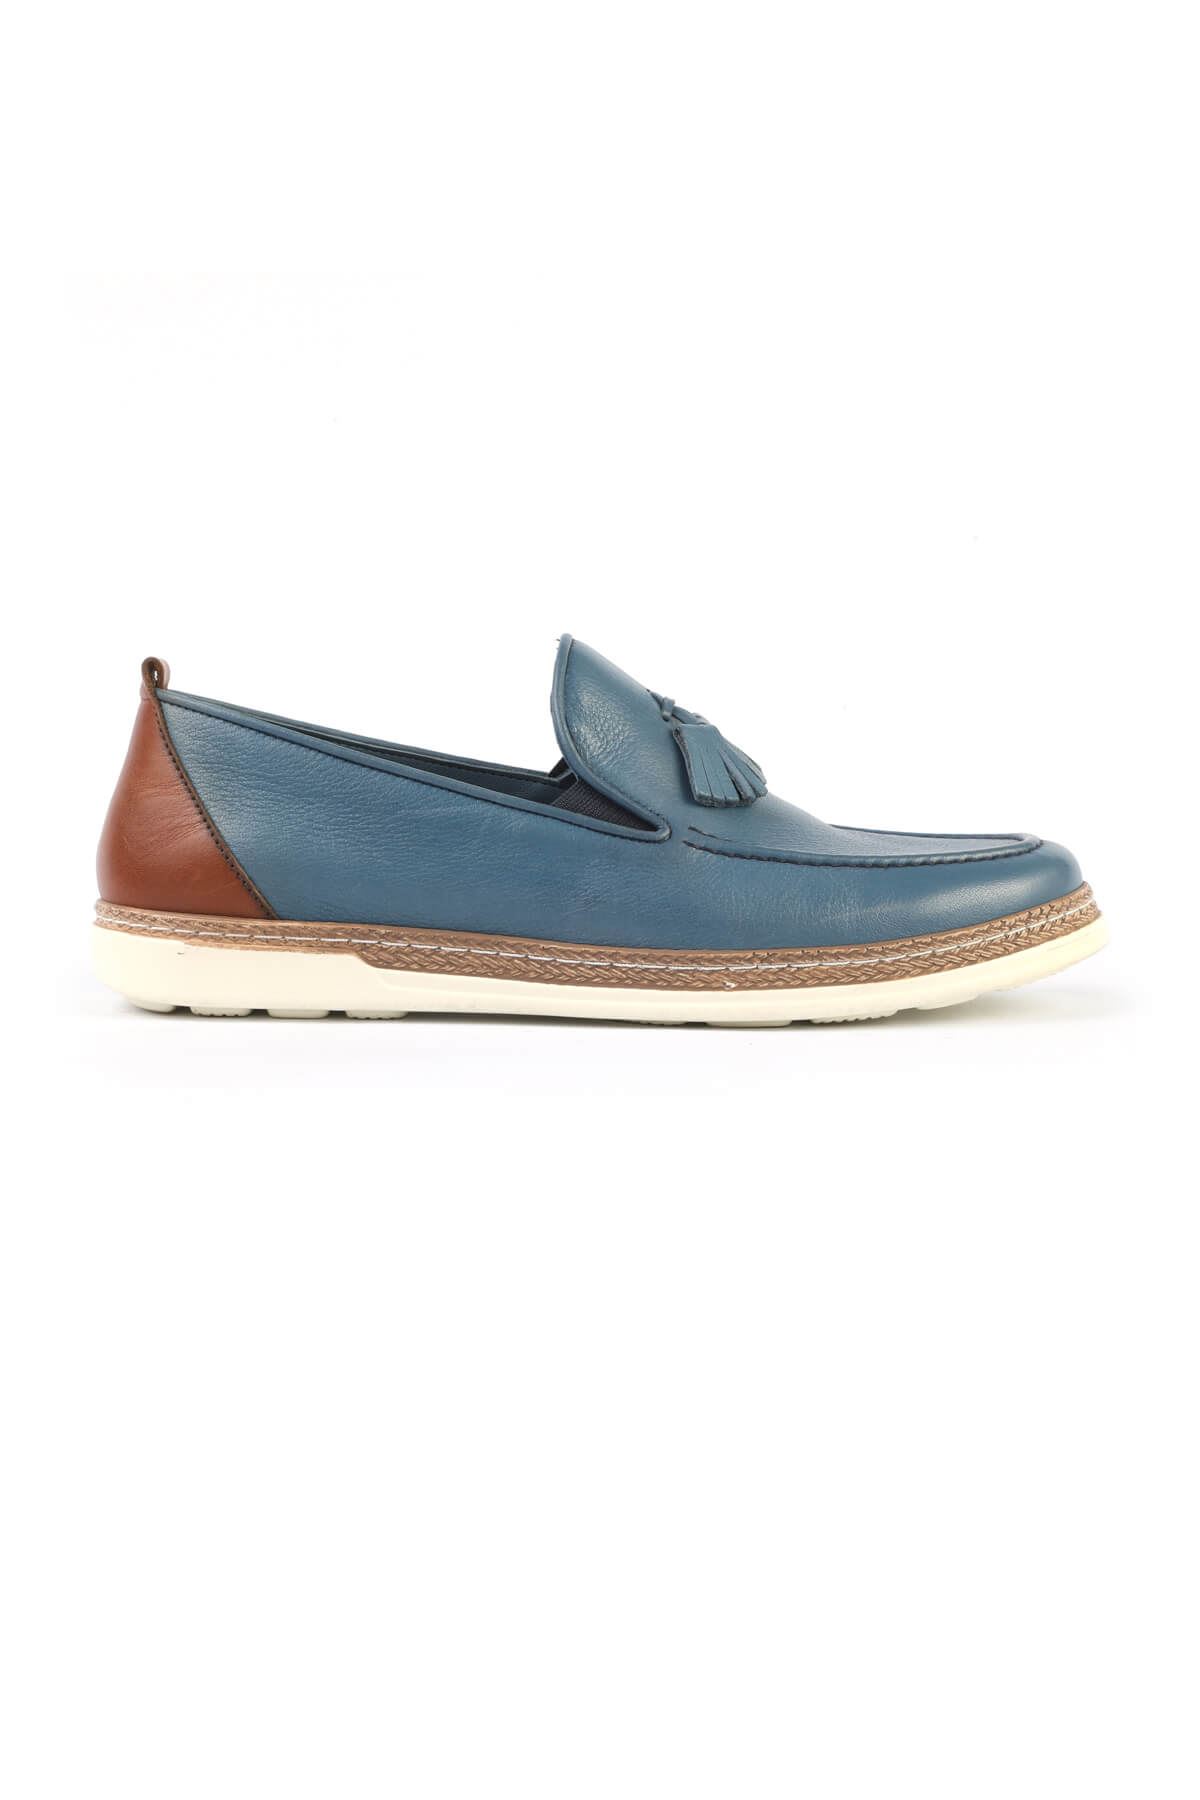 Libero C625 Blue Loafer Shoes